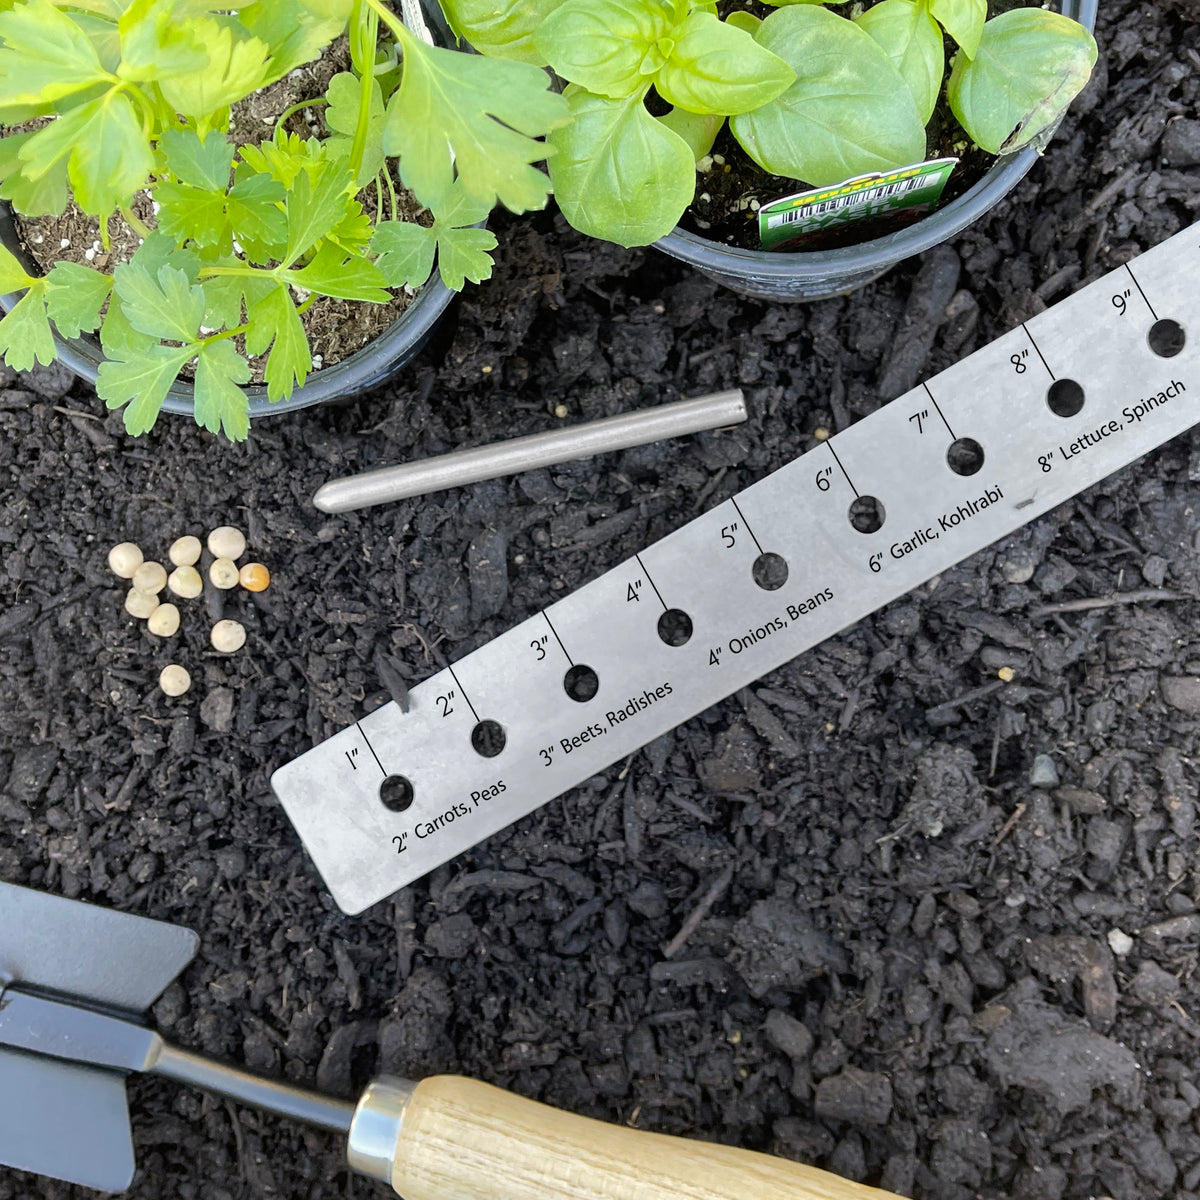 Seeding Ruler SeedWooden Seed Plant Spacing Ruler Tool with Dibber